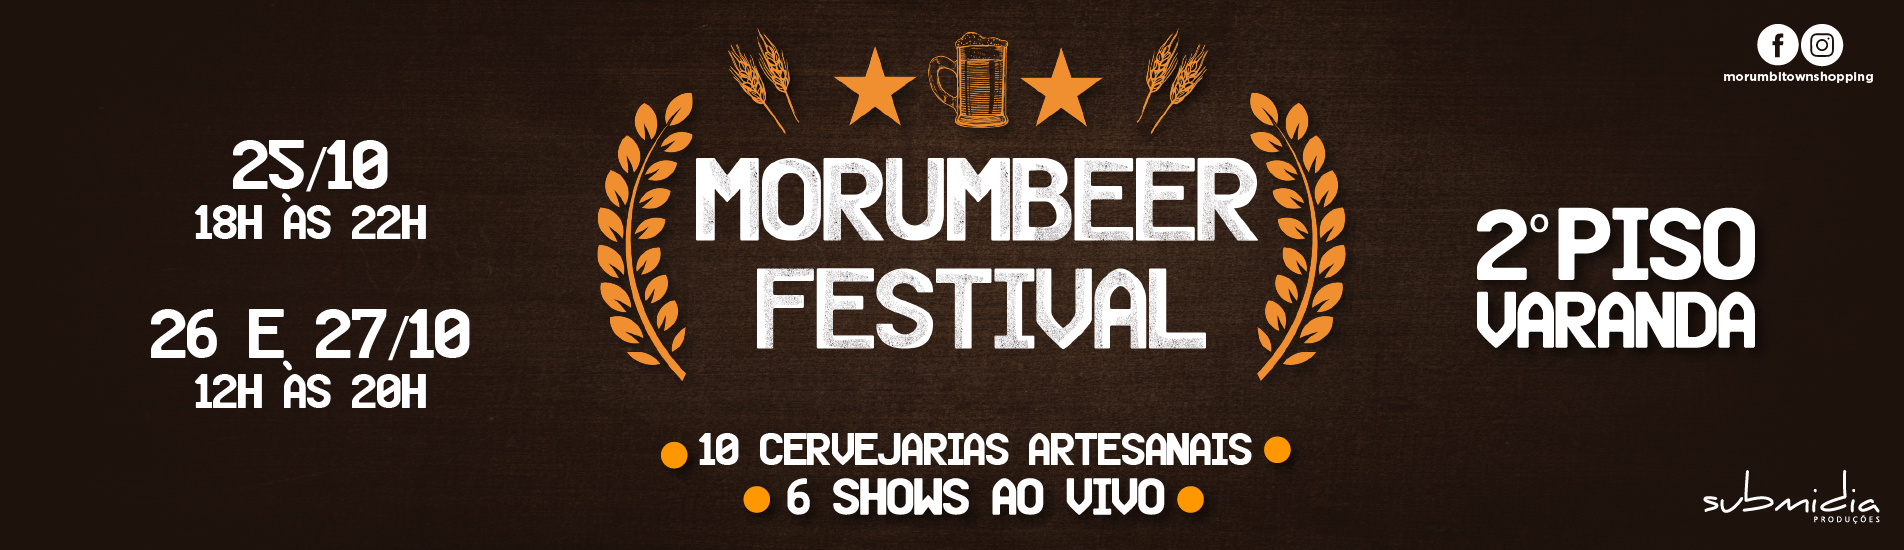 Morumbeer Festival